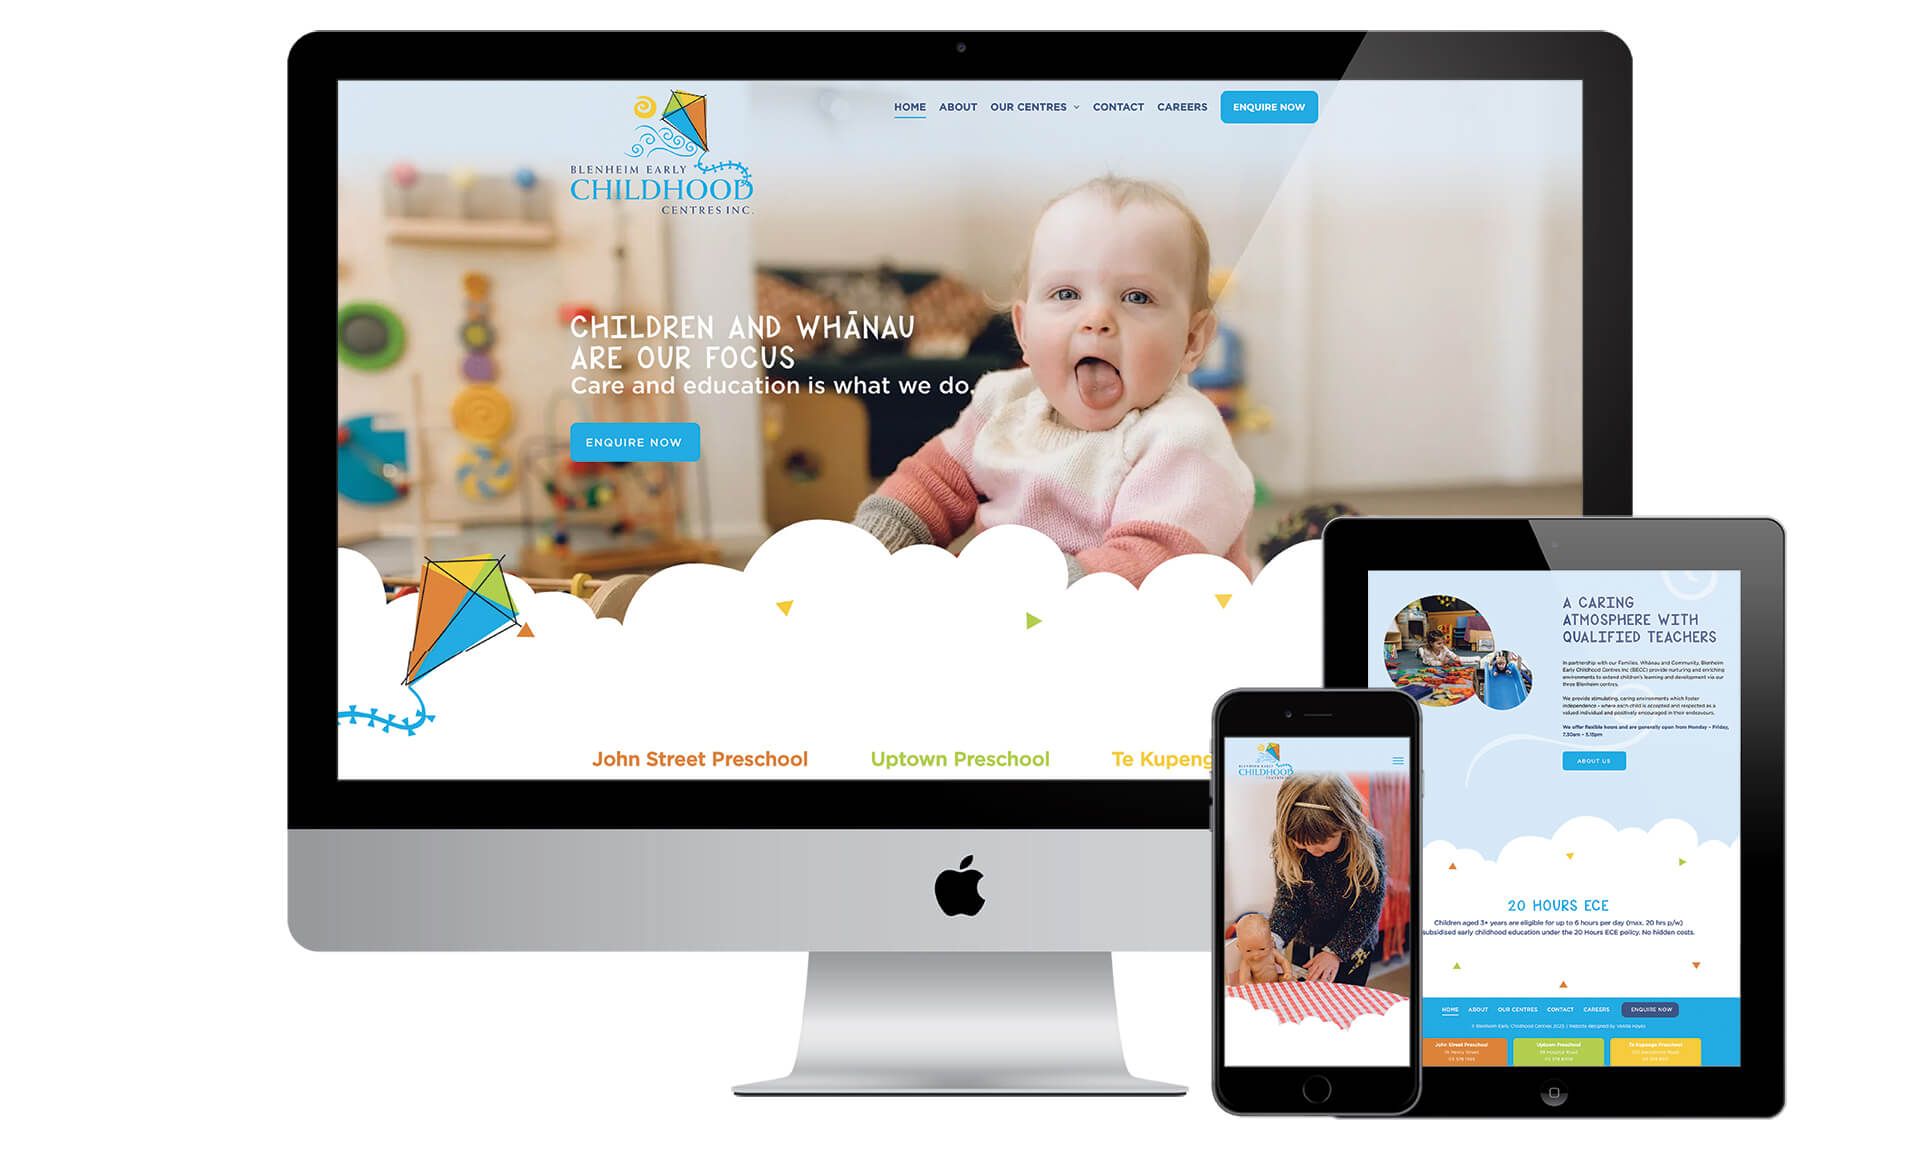 Blenheim Early Childhood Centres website designed by Vanilla Hayes creative graphic design  studio in Blenheim, Marlborough, New Zealand